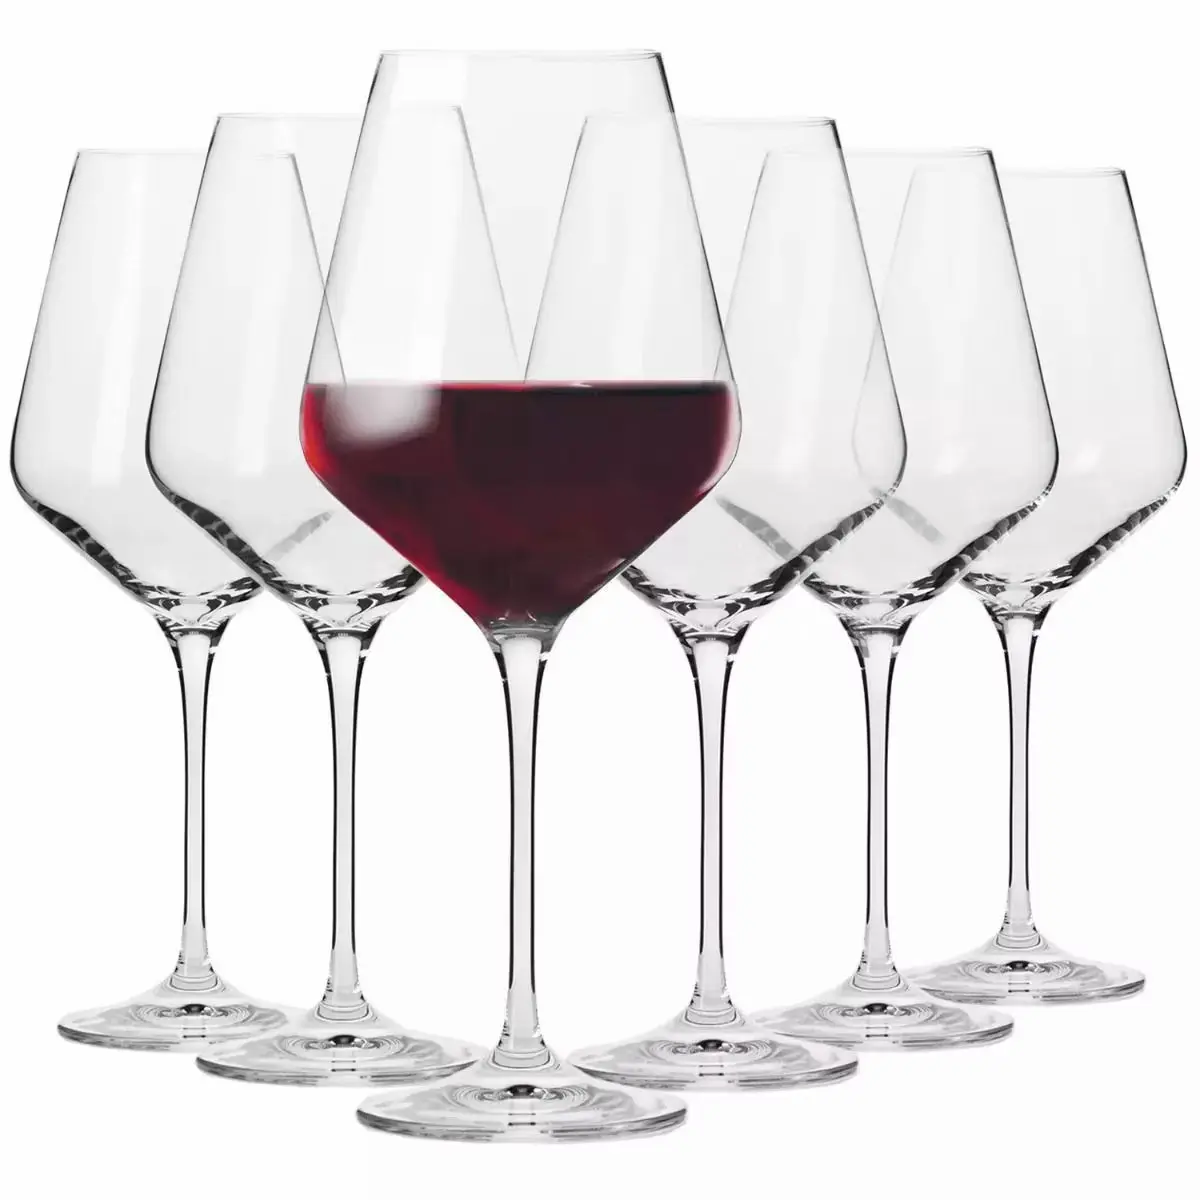 Elegant Red Wine Glass 490 ml - 6-Piece Set  16.6 oz - Premium Quality - B2B Wholesale Offer Wine Glasses - Krosno Glass